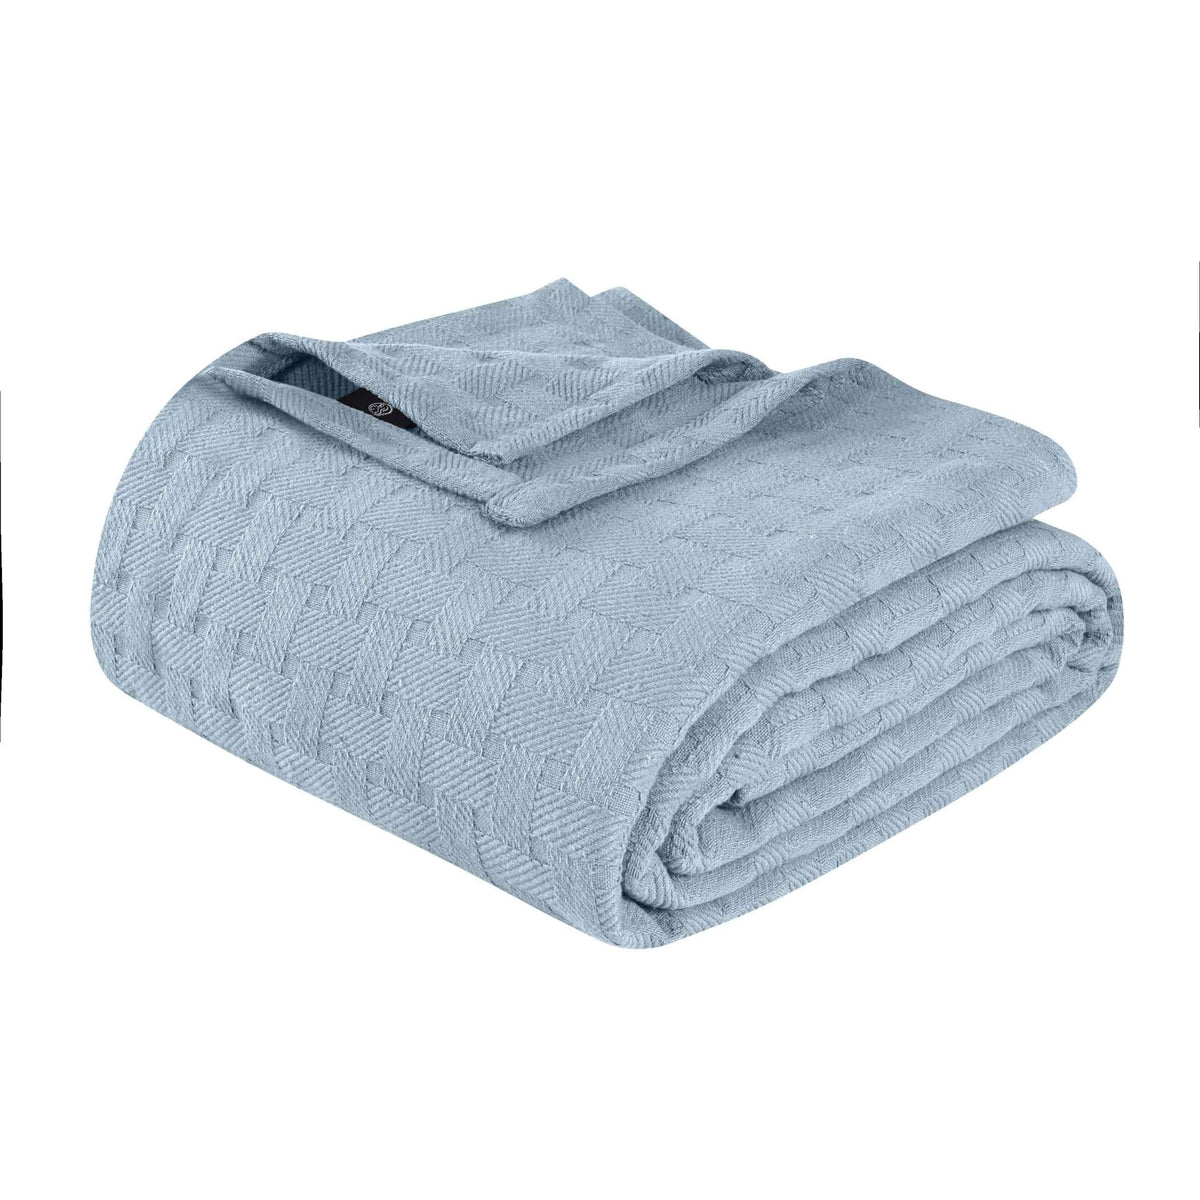 Basketweave All Season Cotton Blanket - Light Blue